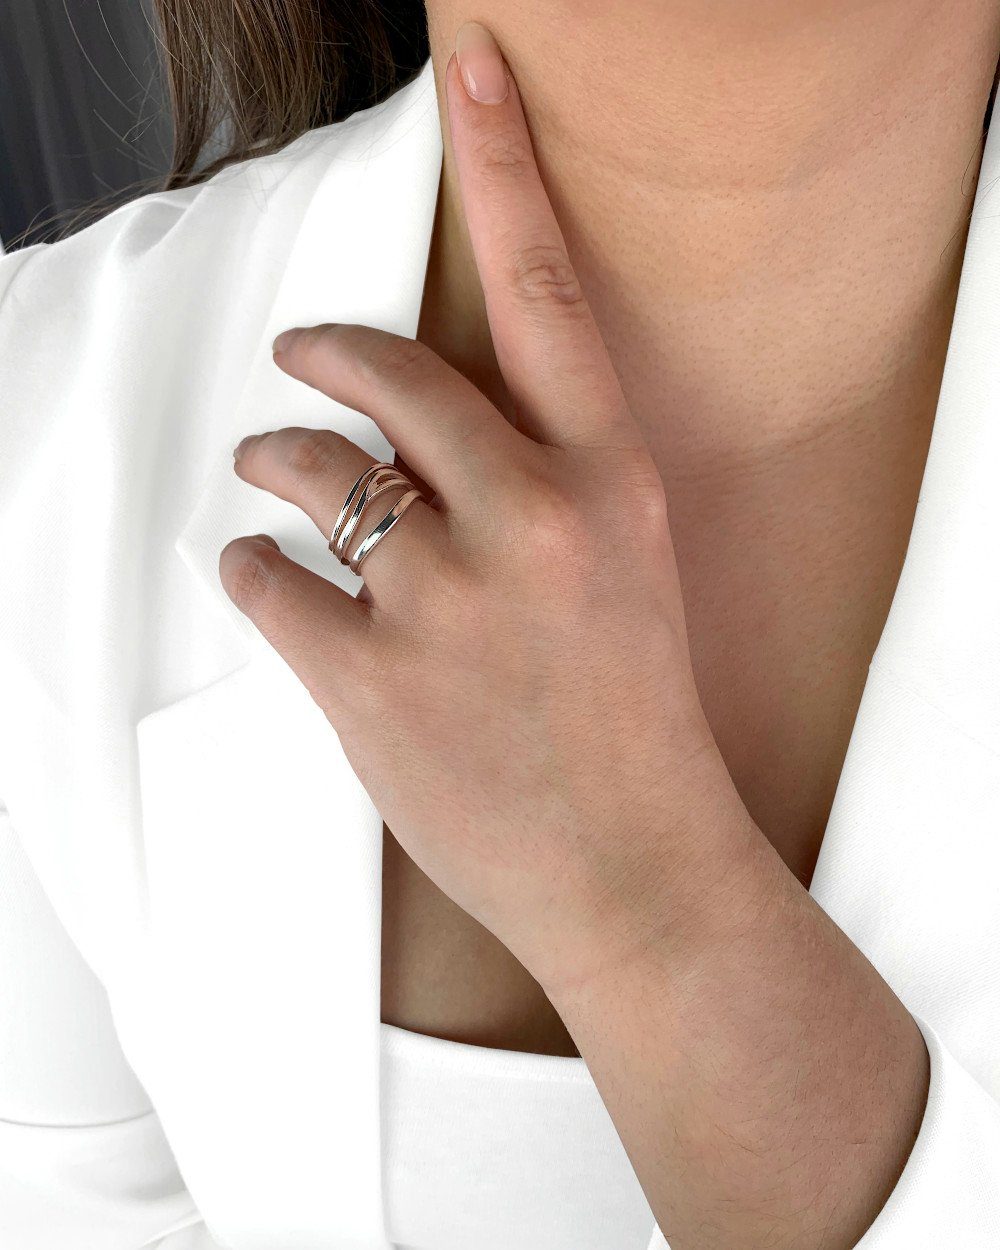 Emporio Armani Ring online kaufen | OTTO